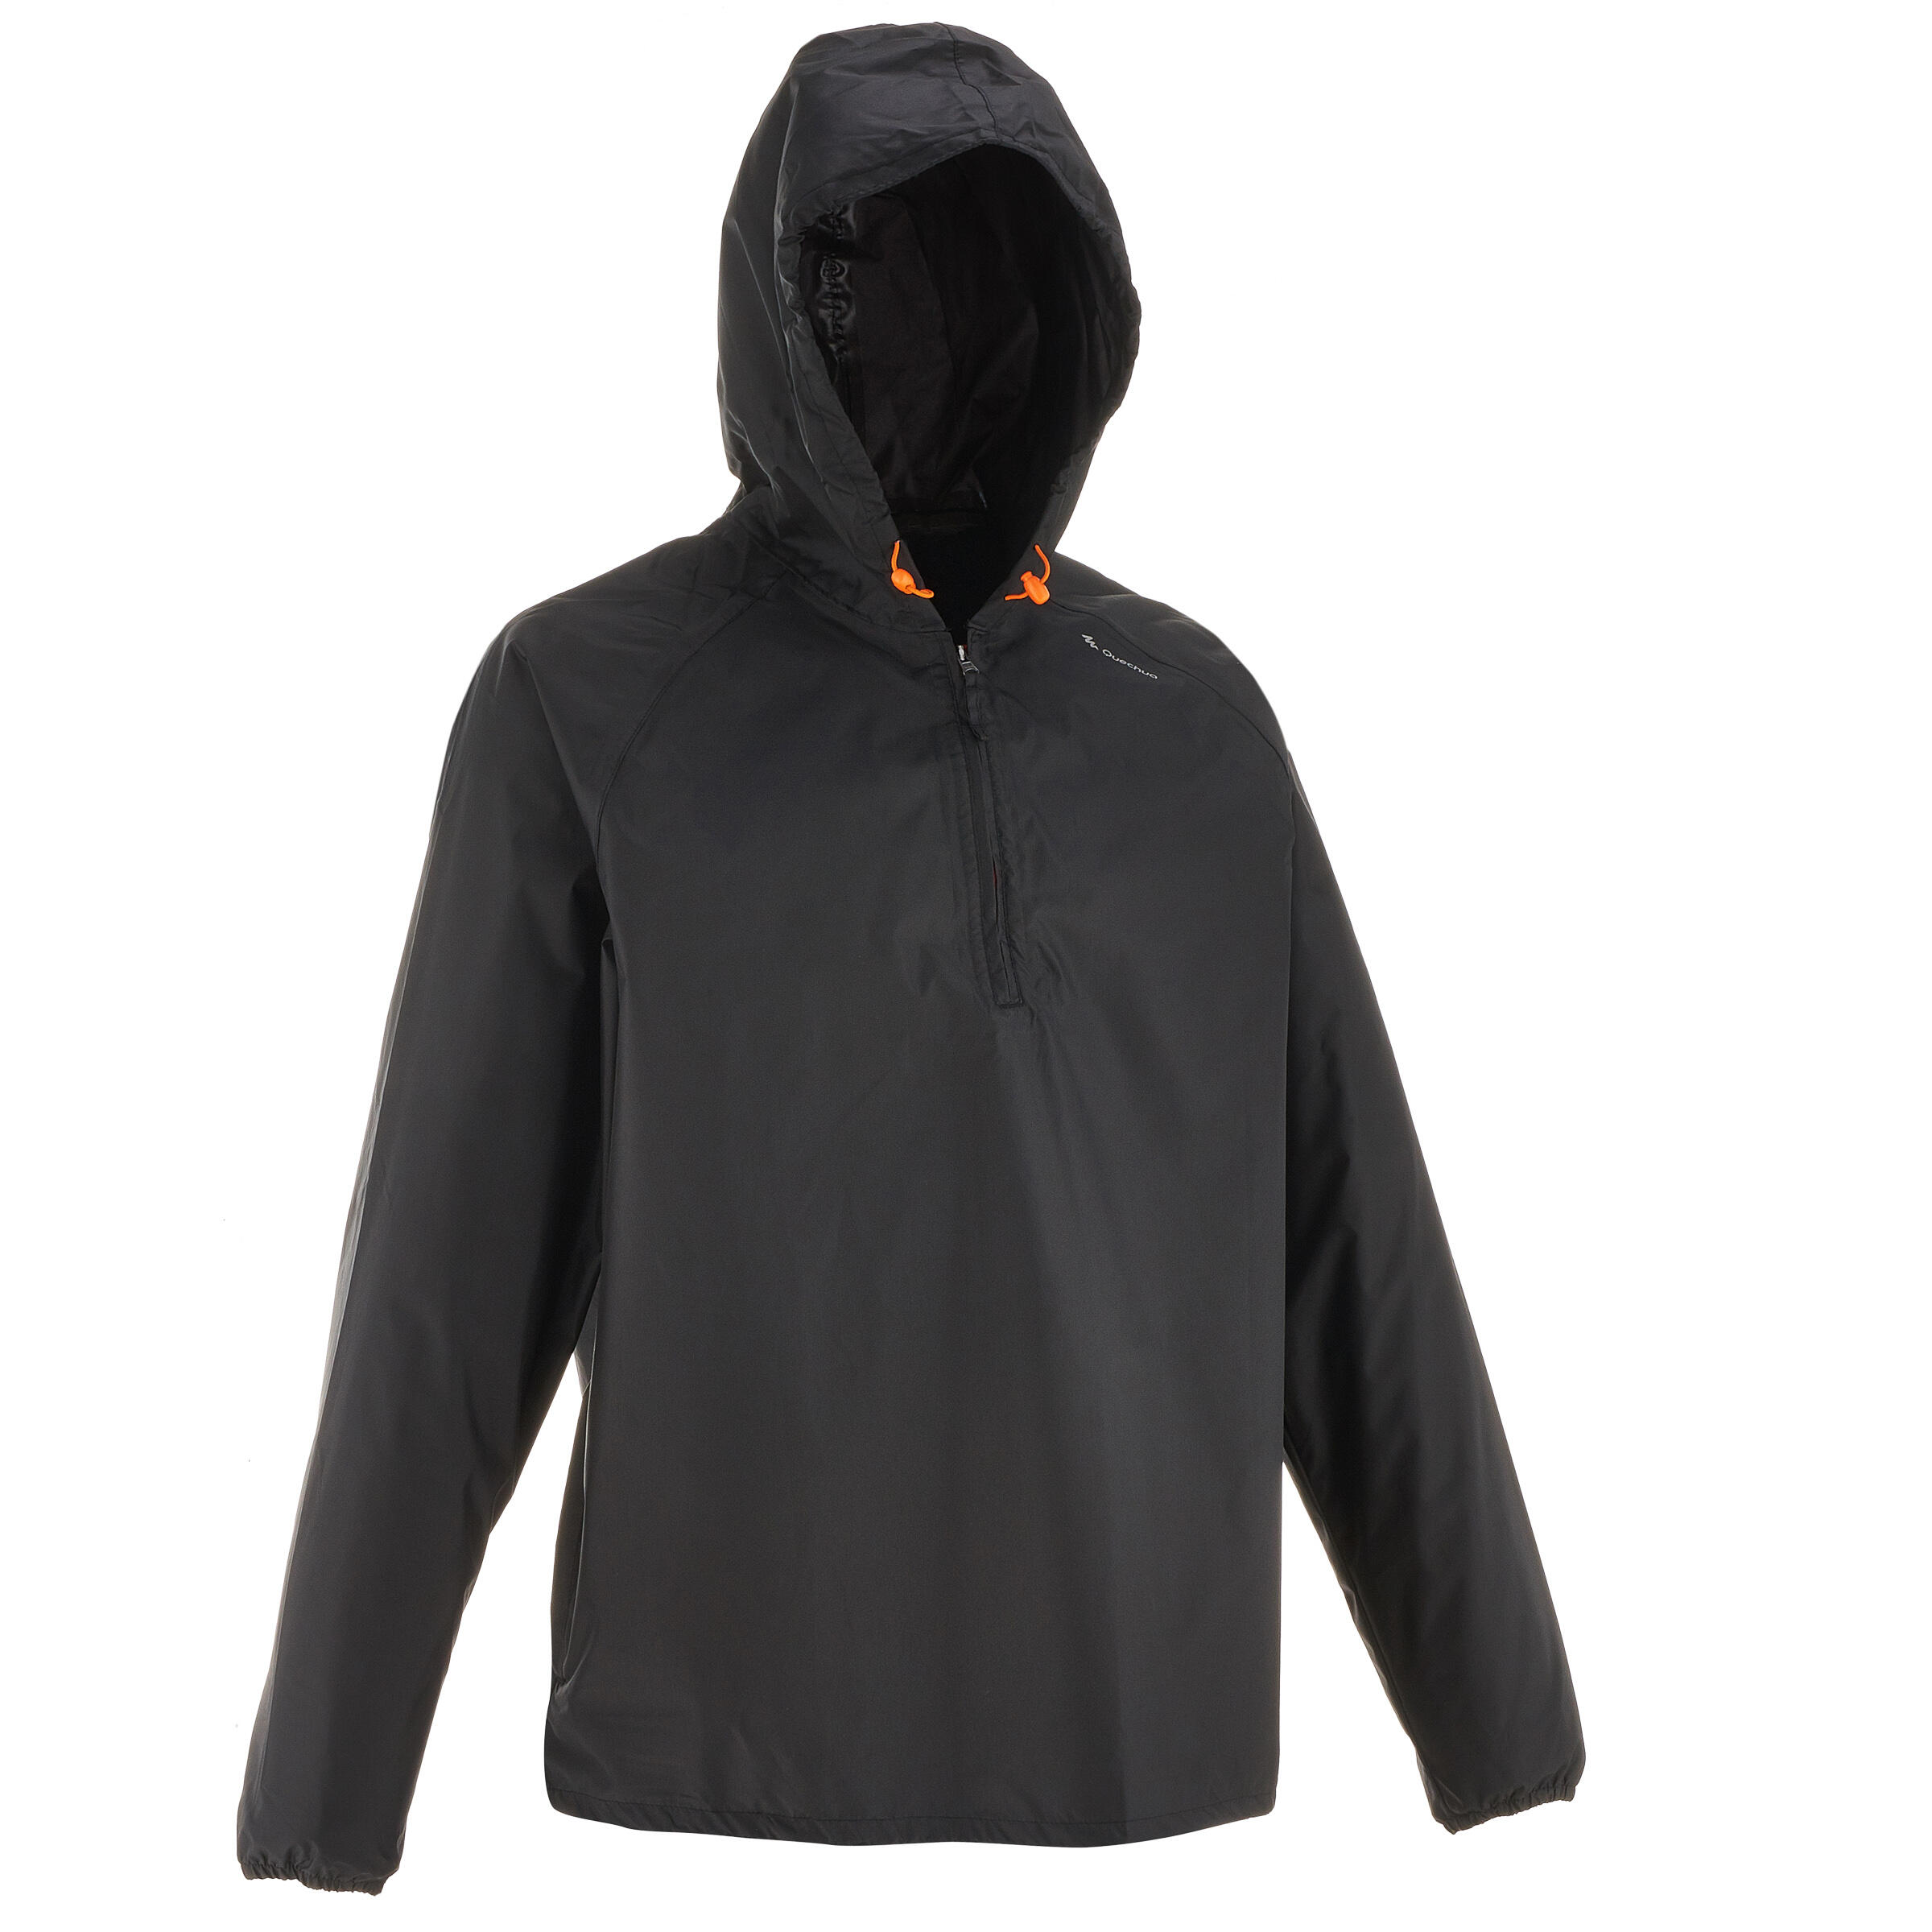 decathlon rain jacket review